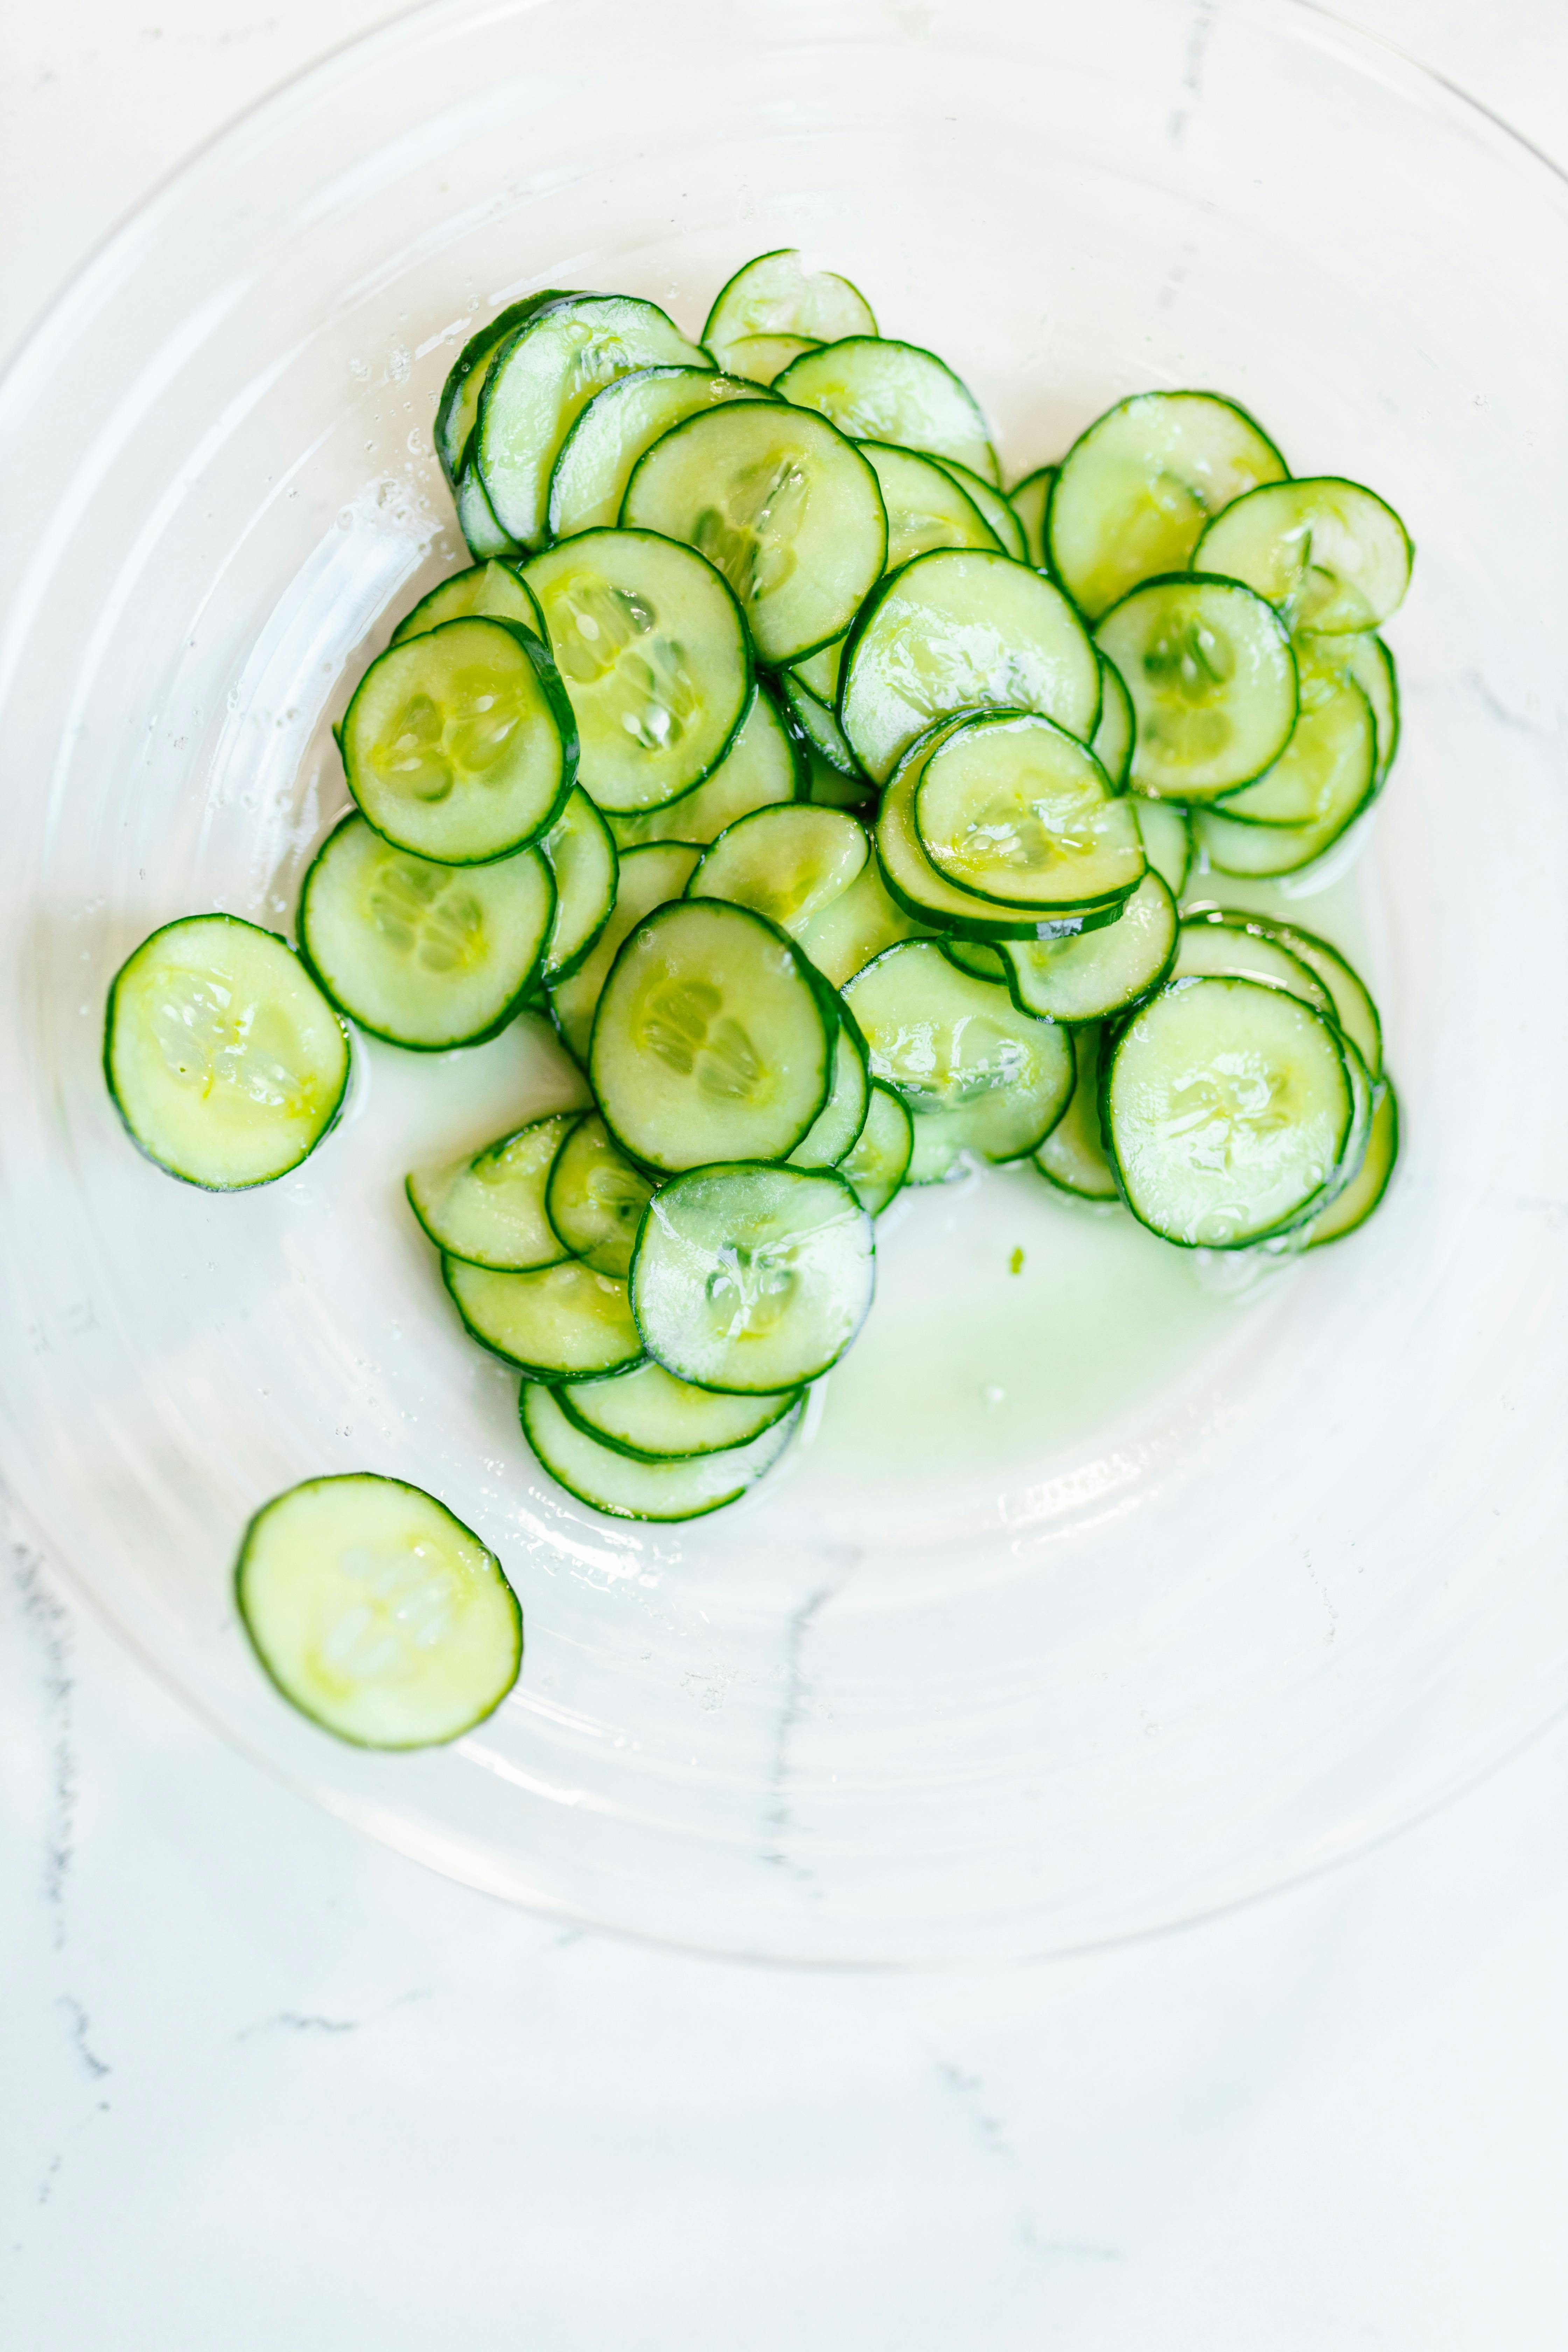 English cucumber stock image. Image of salad, edible, slices - 5418615